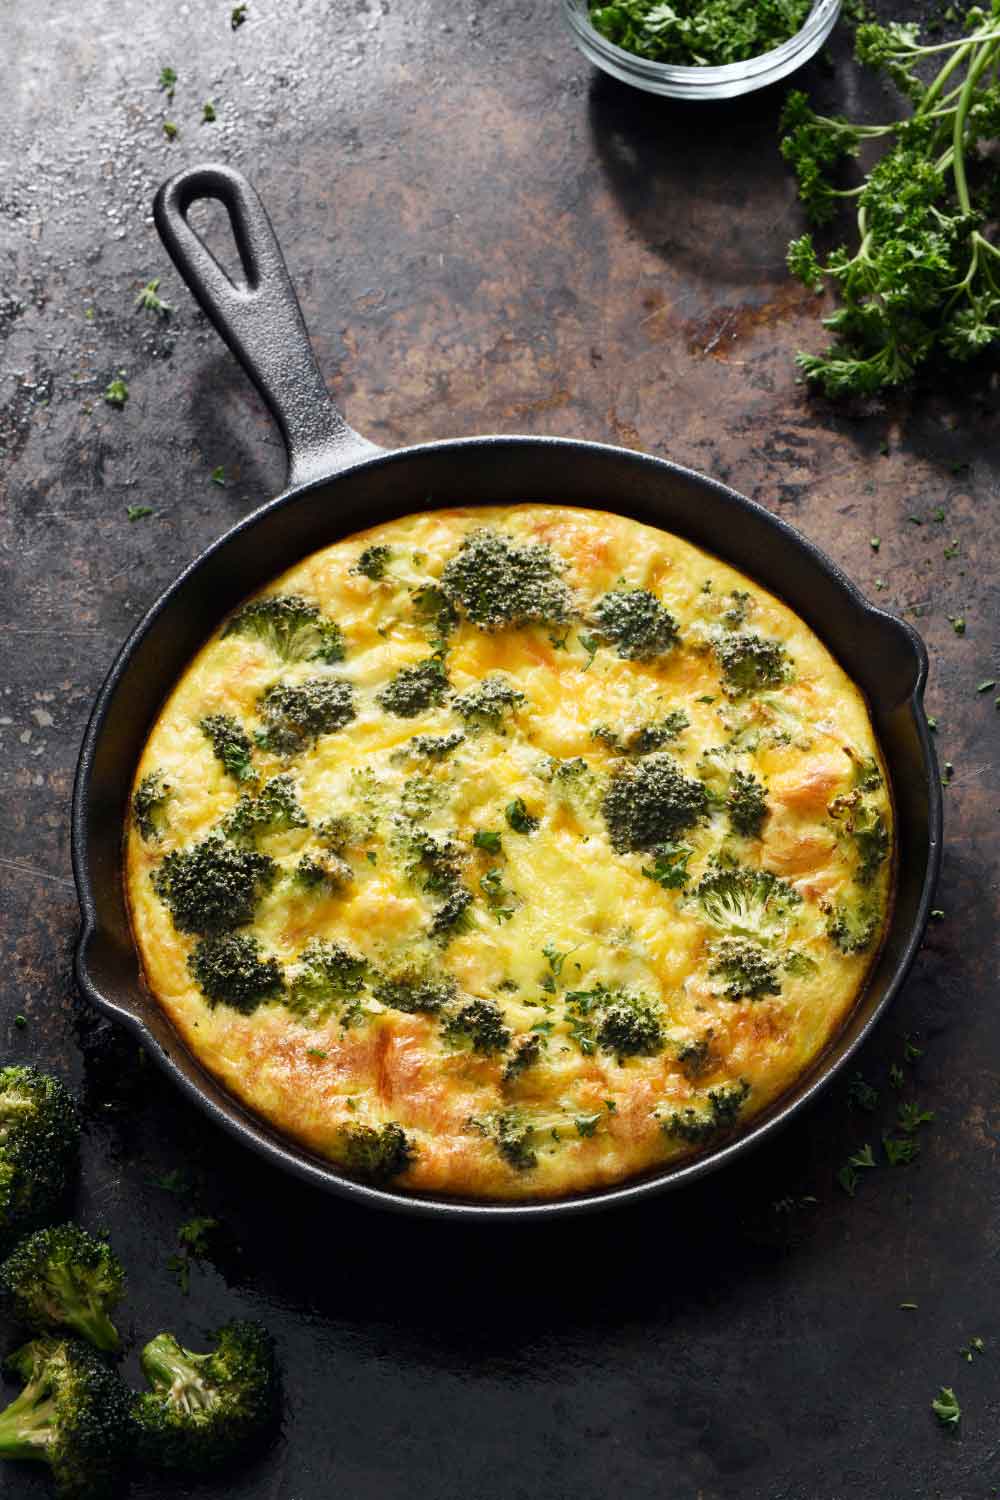 Mediterranean Broccoli & Cheese Omelet